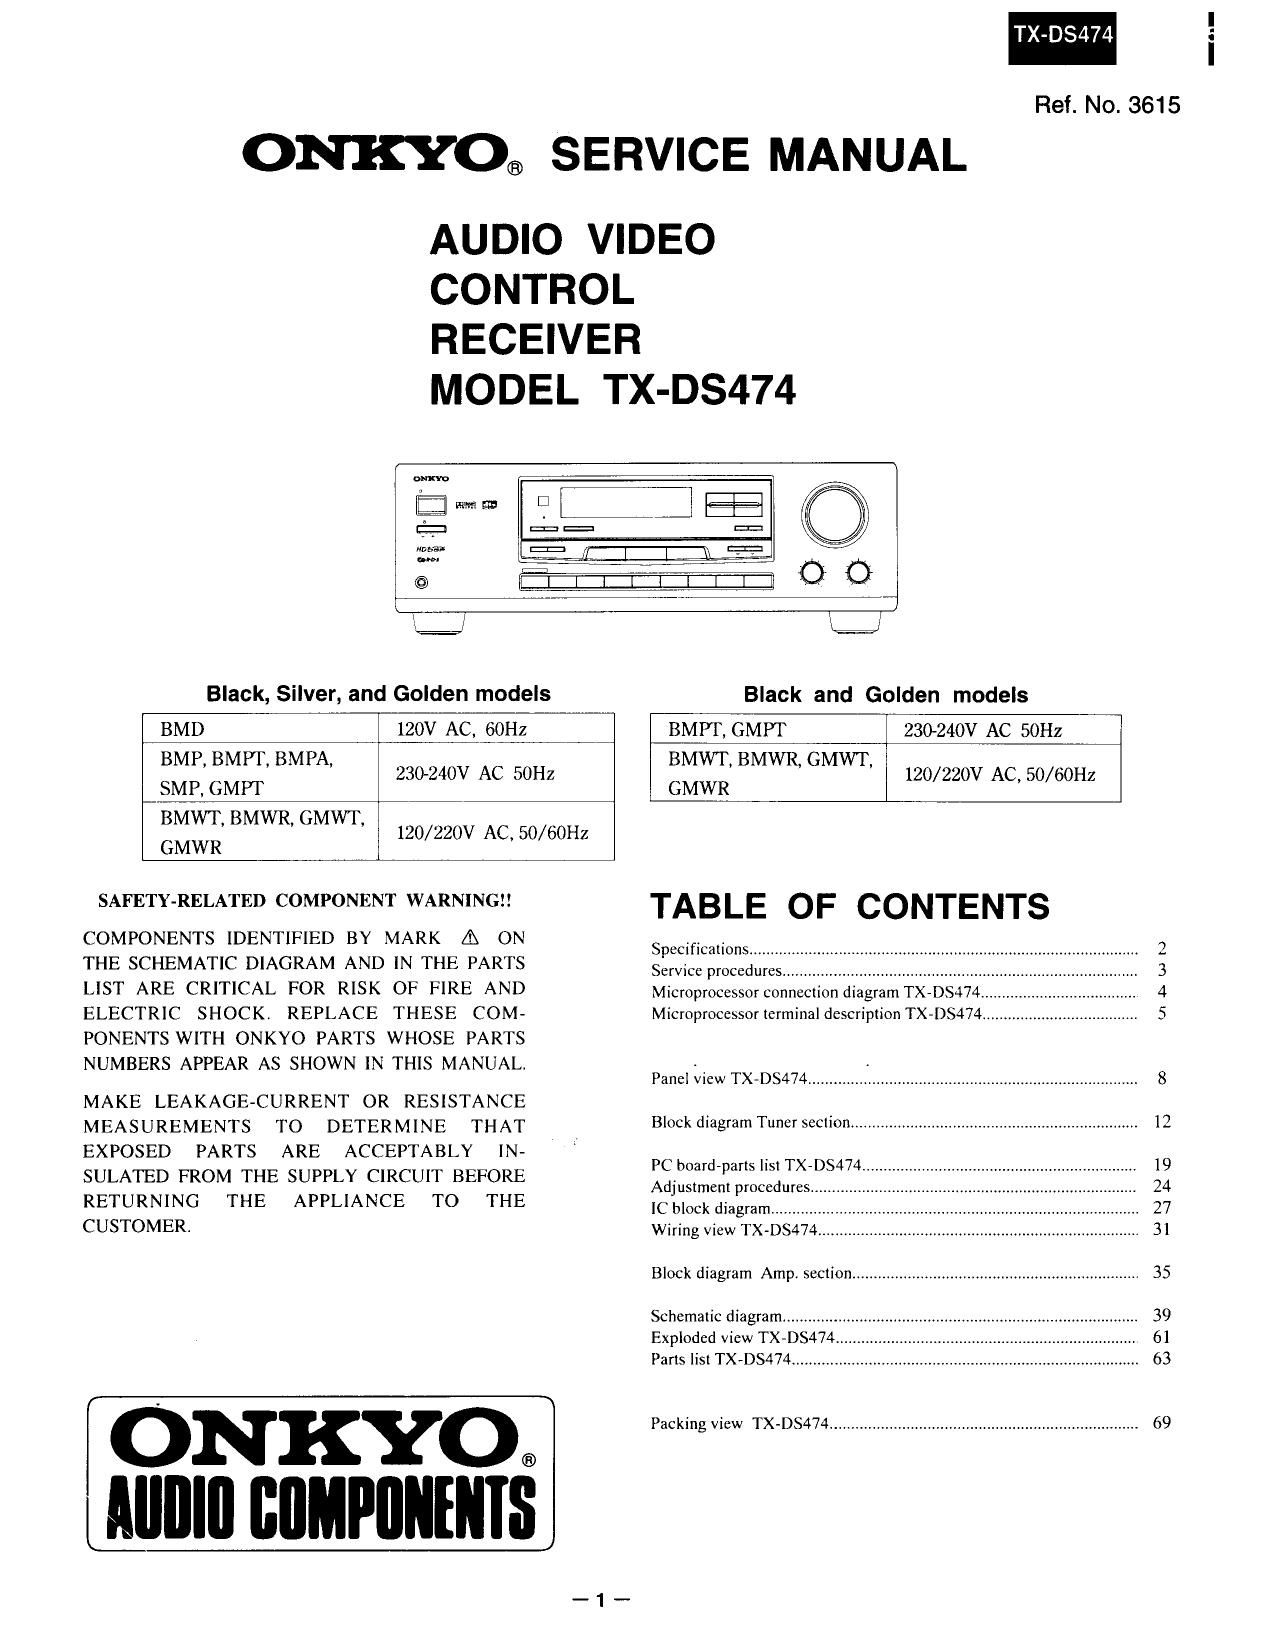 Onkyo TXDS 474 Service Manual